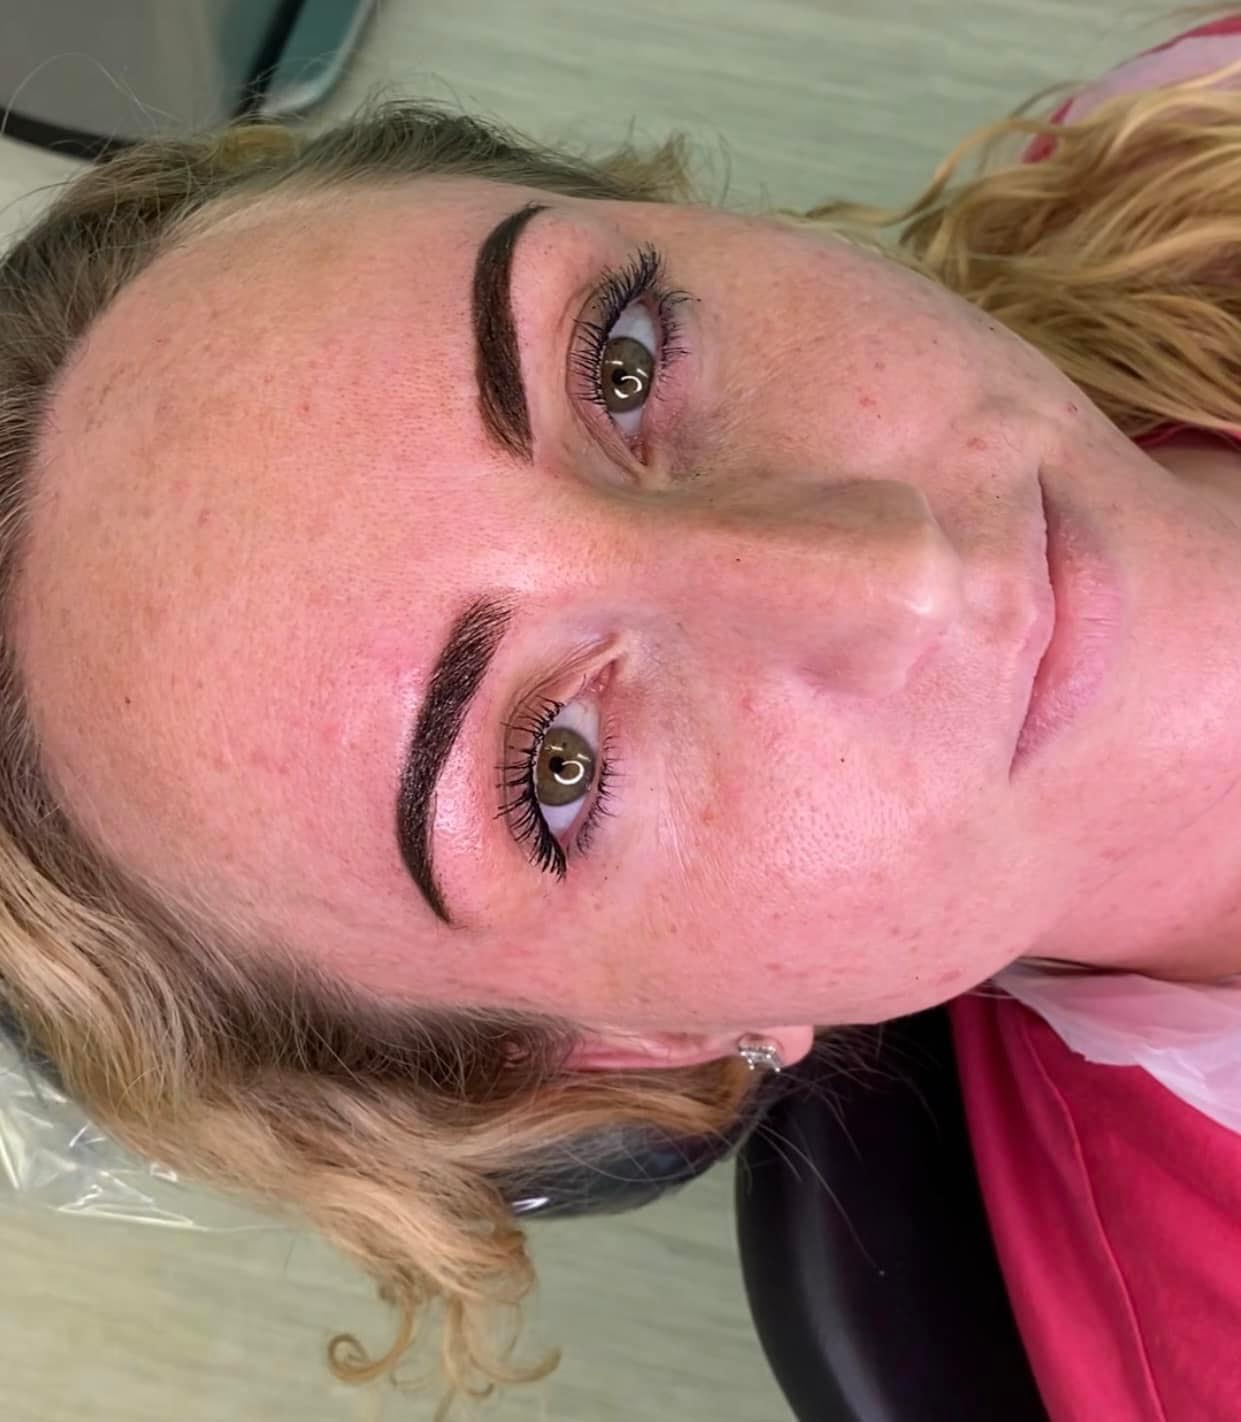 Danielle had her own eyebrows tattooed by Katy Jobbins